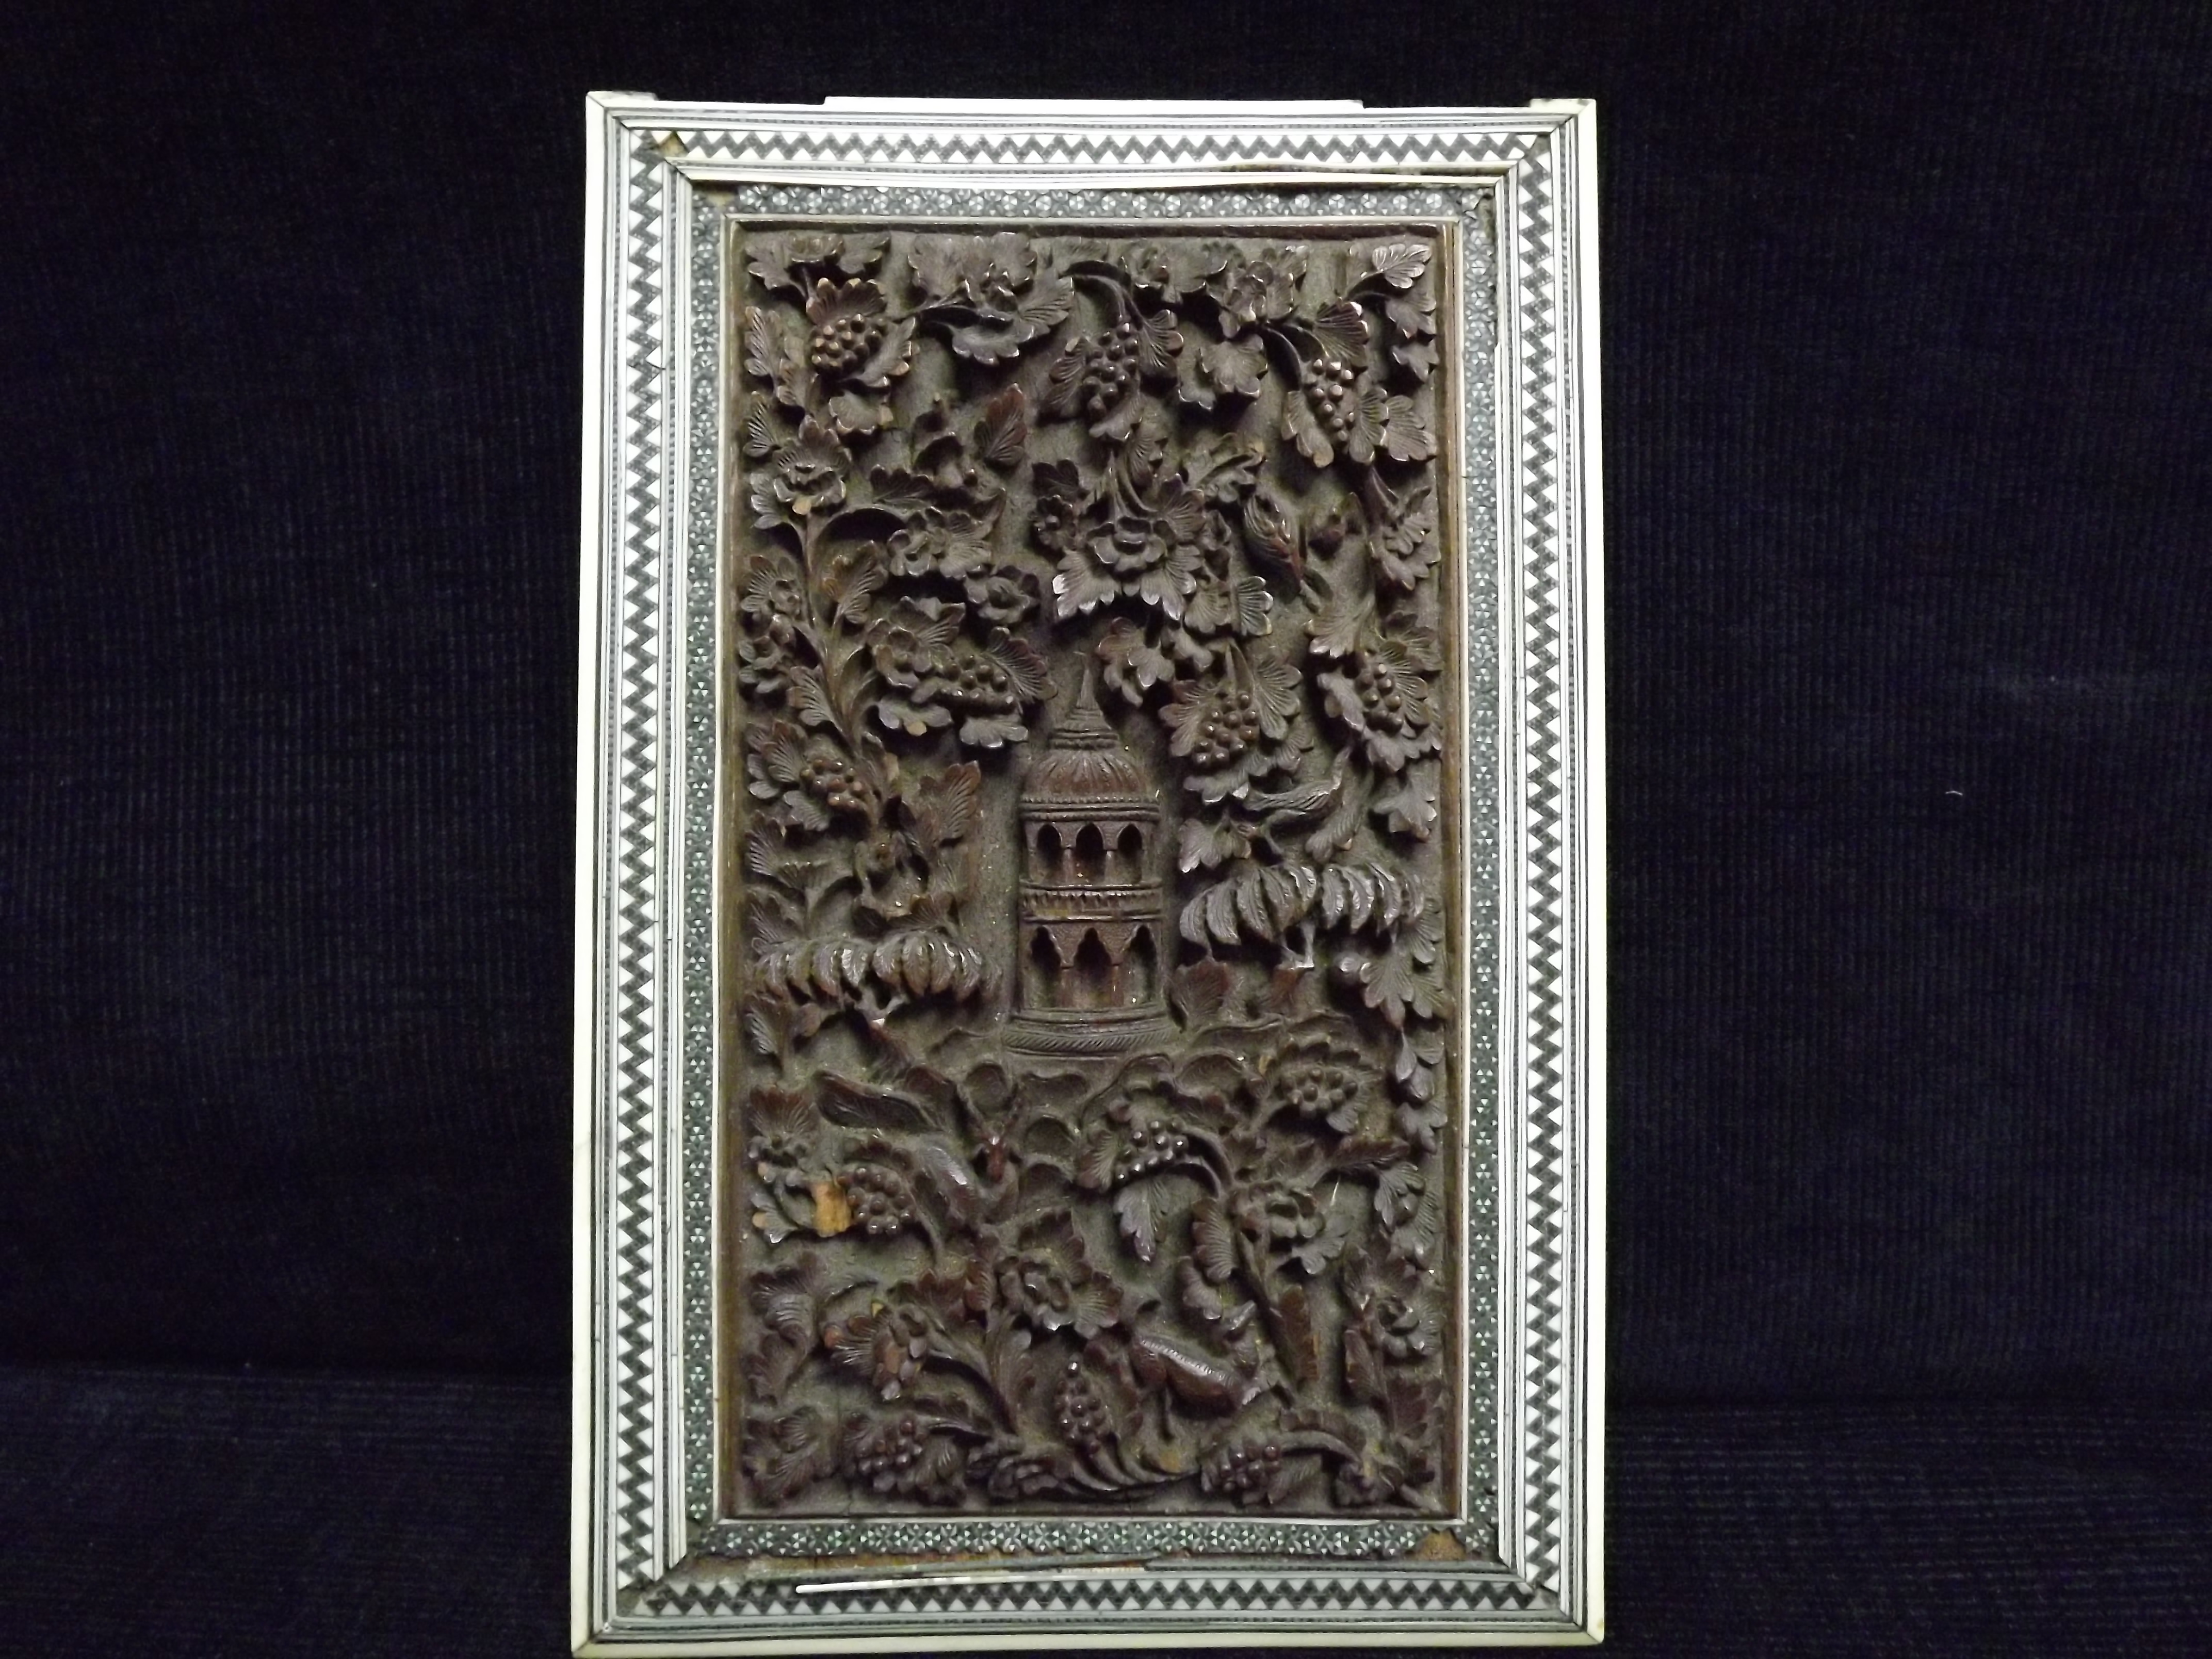 Indian Sadeli Vizagapatam Sandalwood Panel Carving. 19th / 20th century. Framed with Micro-mosaic